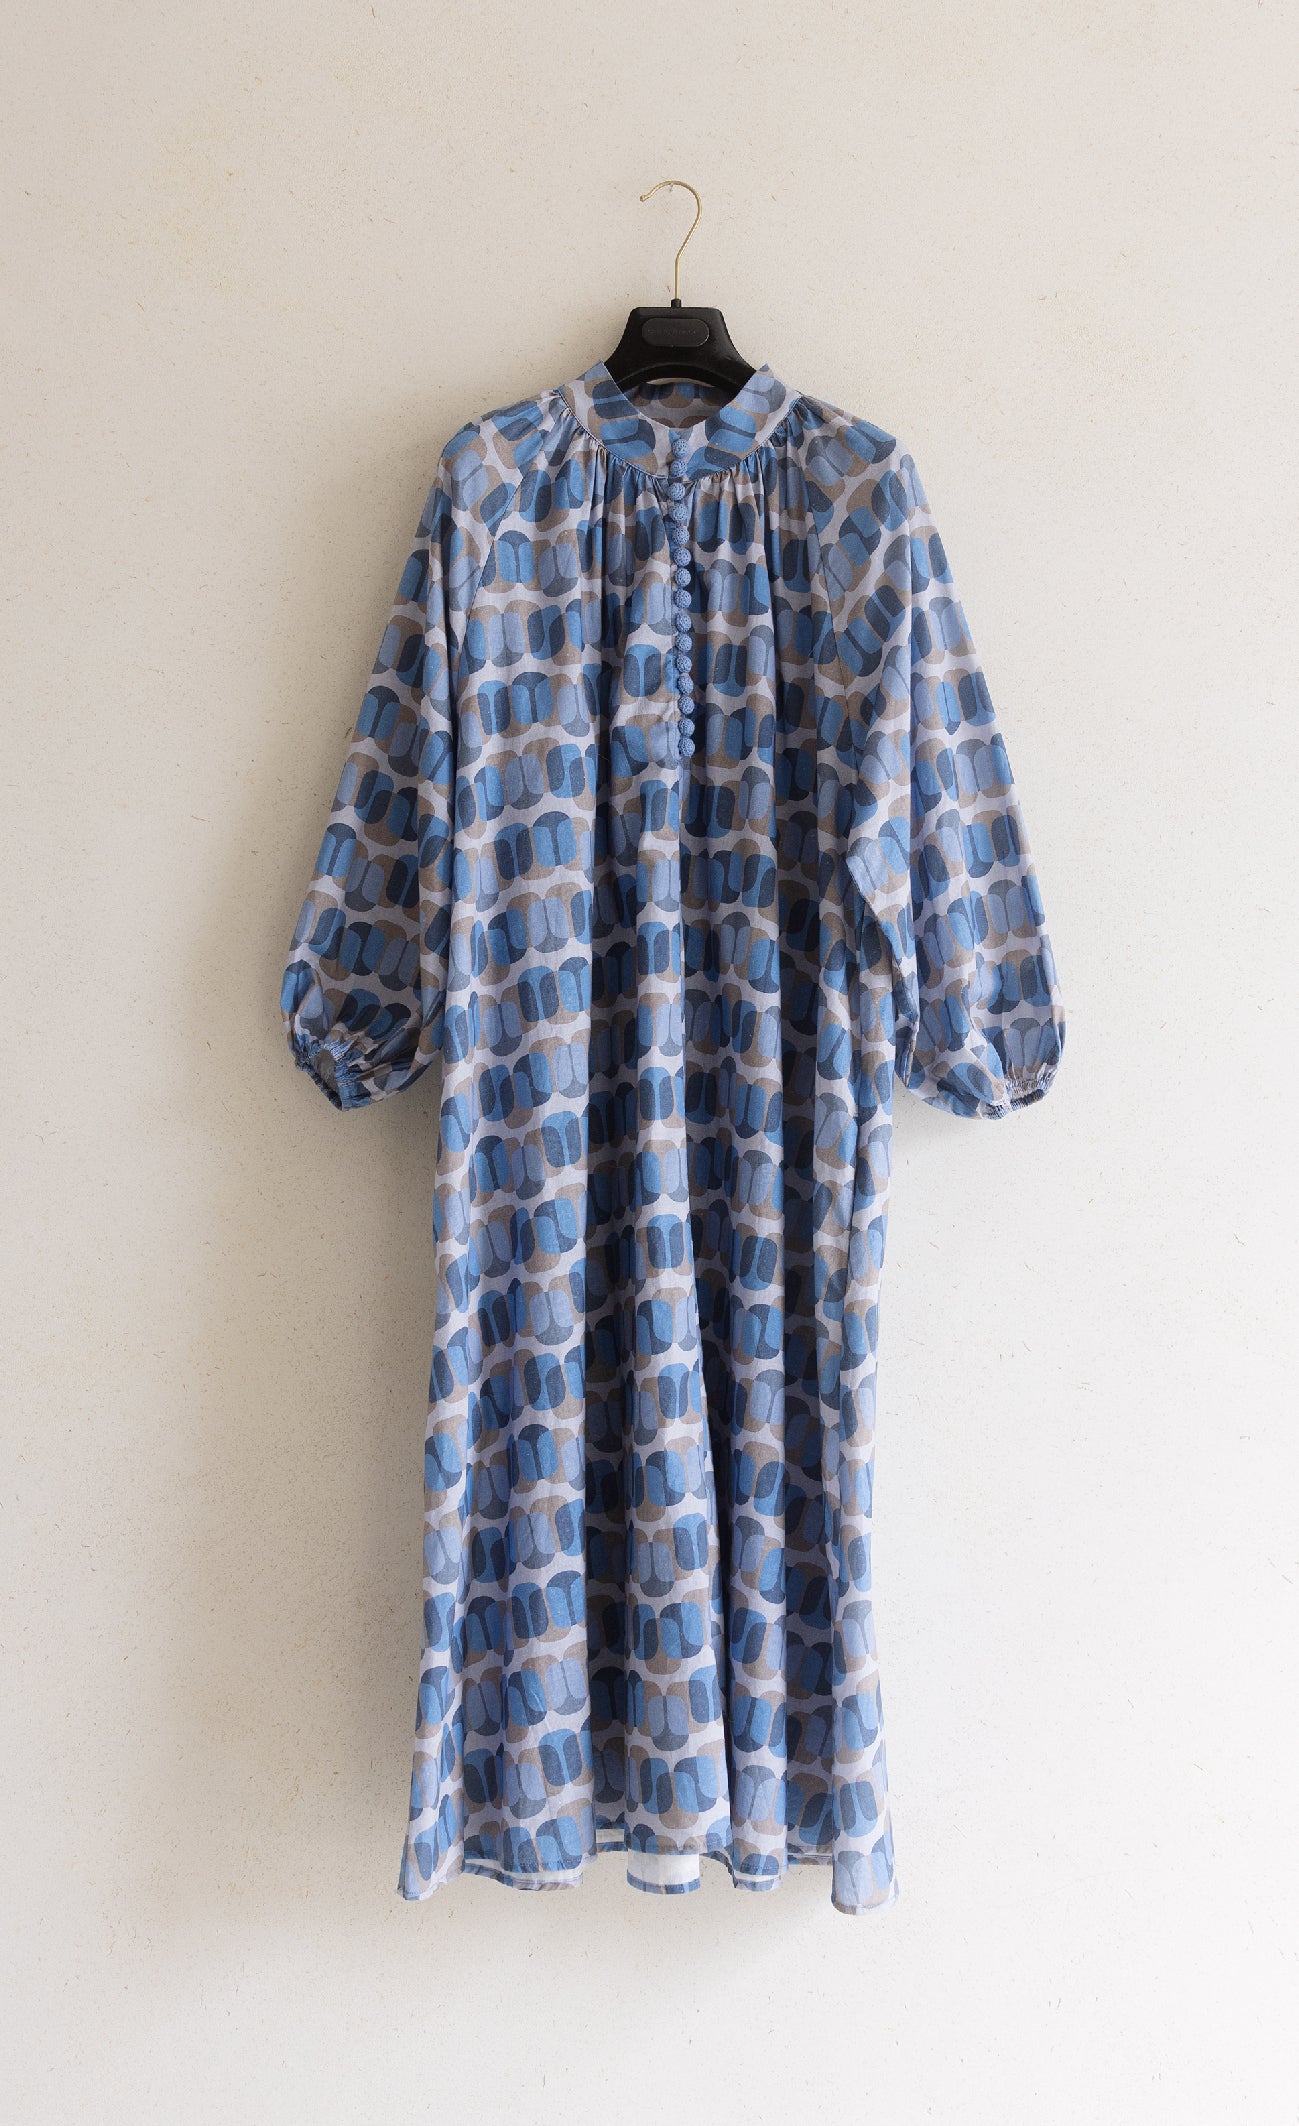 Bohemian printed dress - Blue circle print